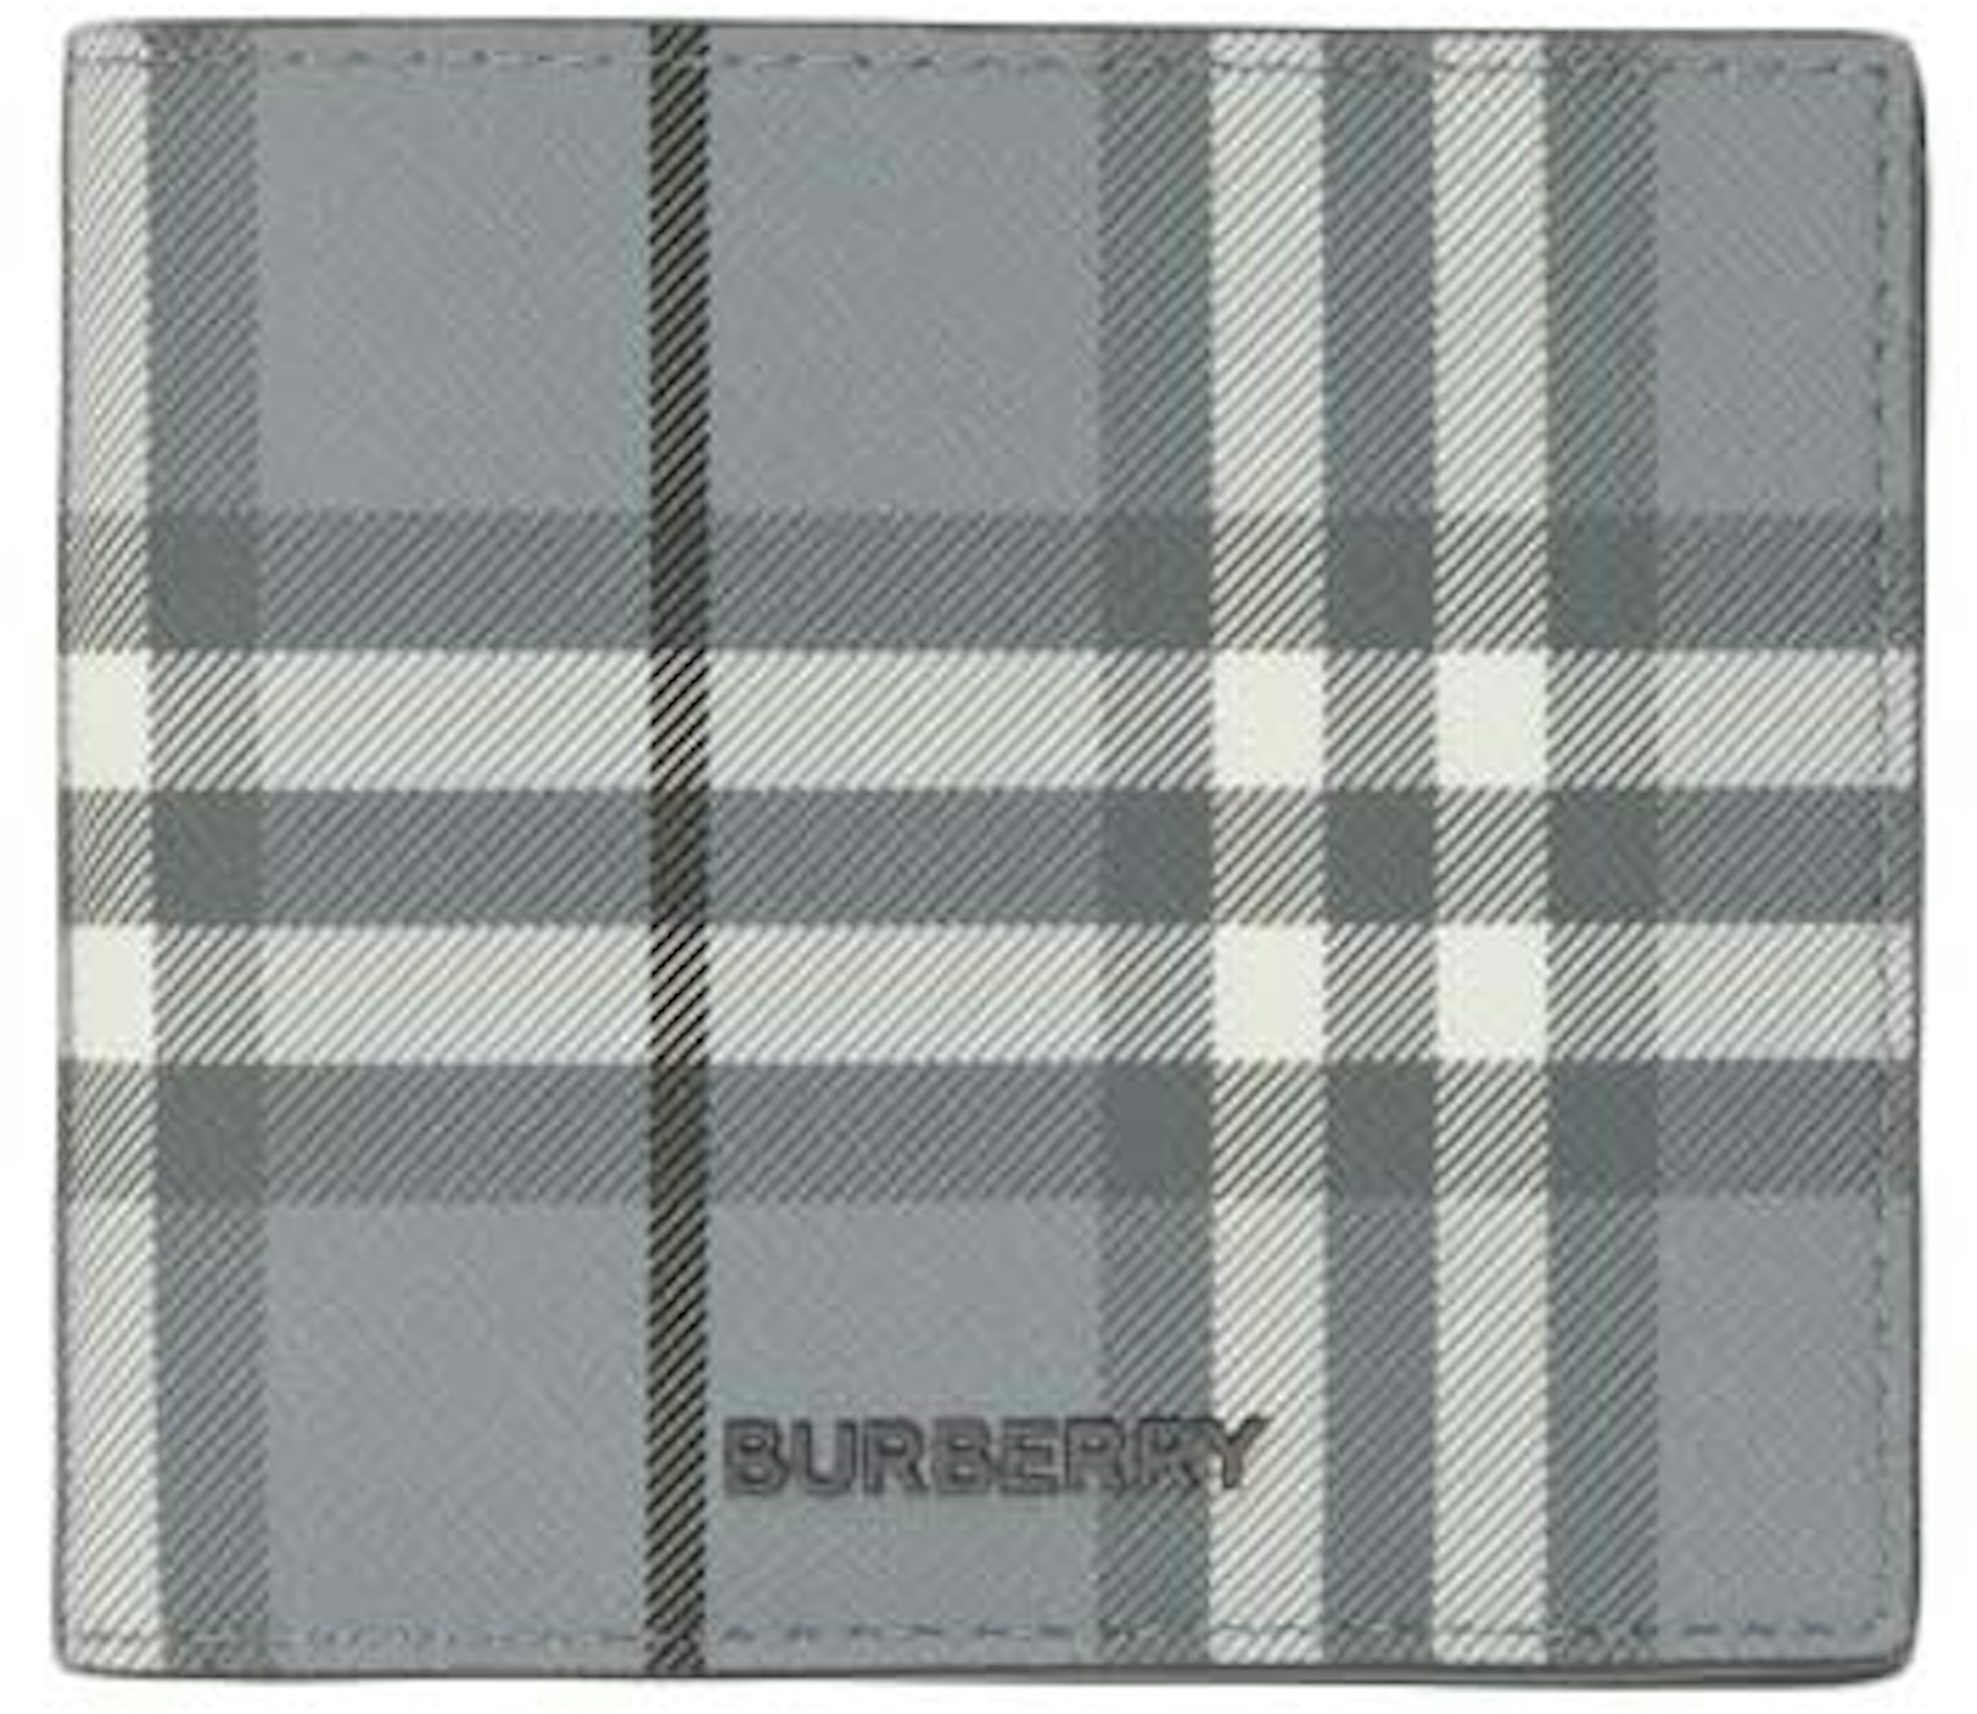 burberry wallet price